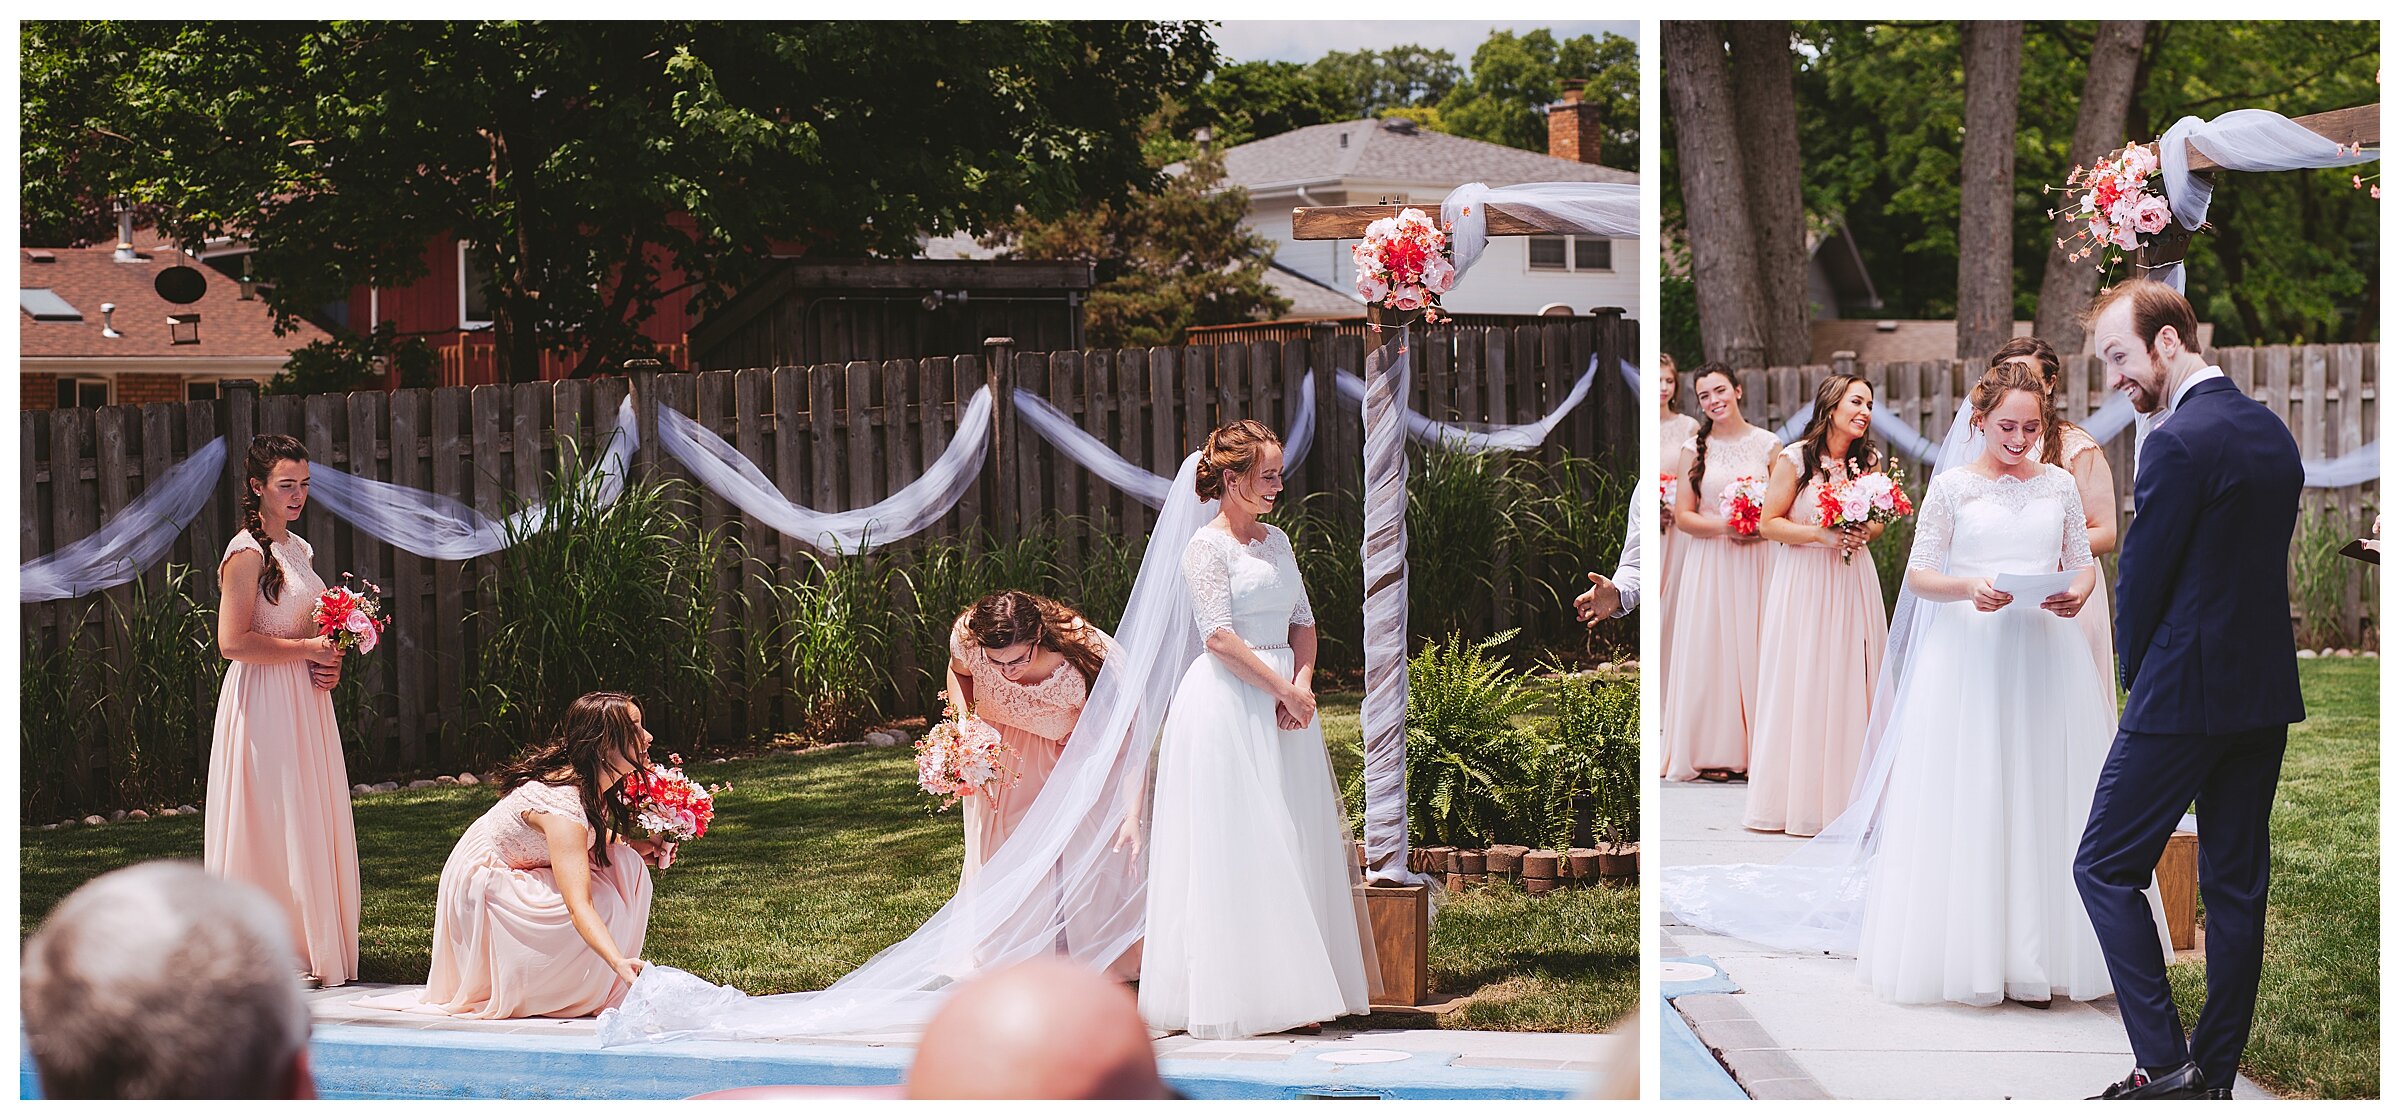 BLOG-backyard-frankfort-illinois-wedding-mackenzie-jarrin-202006-46.jpg